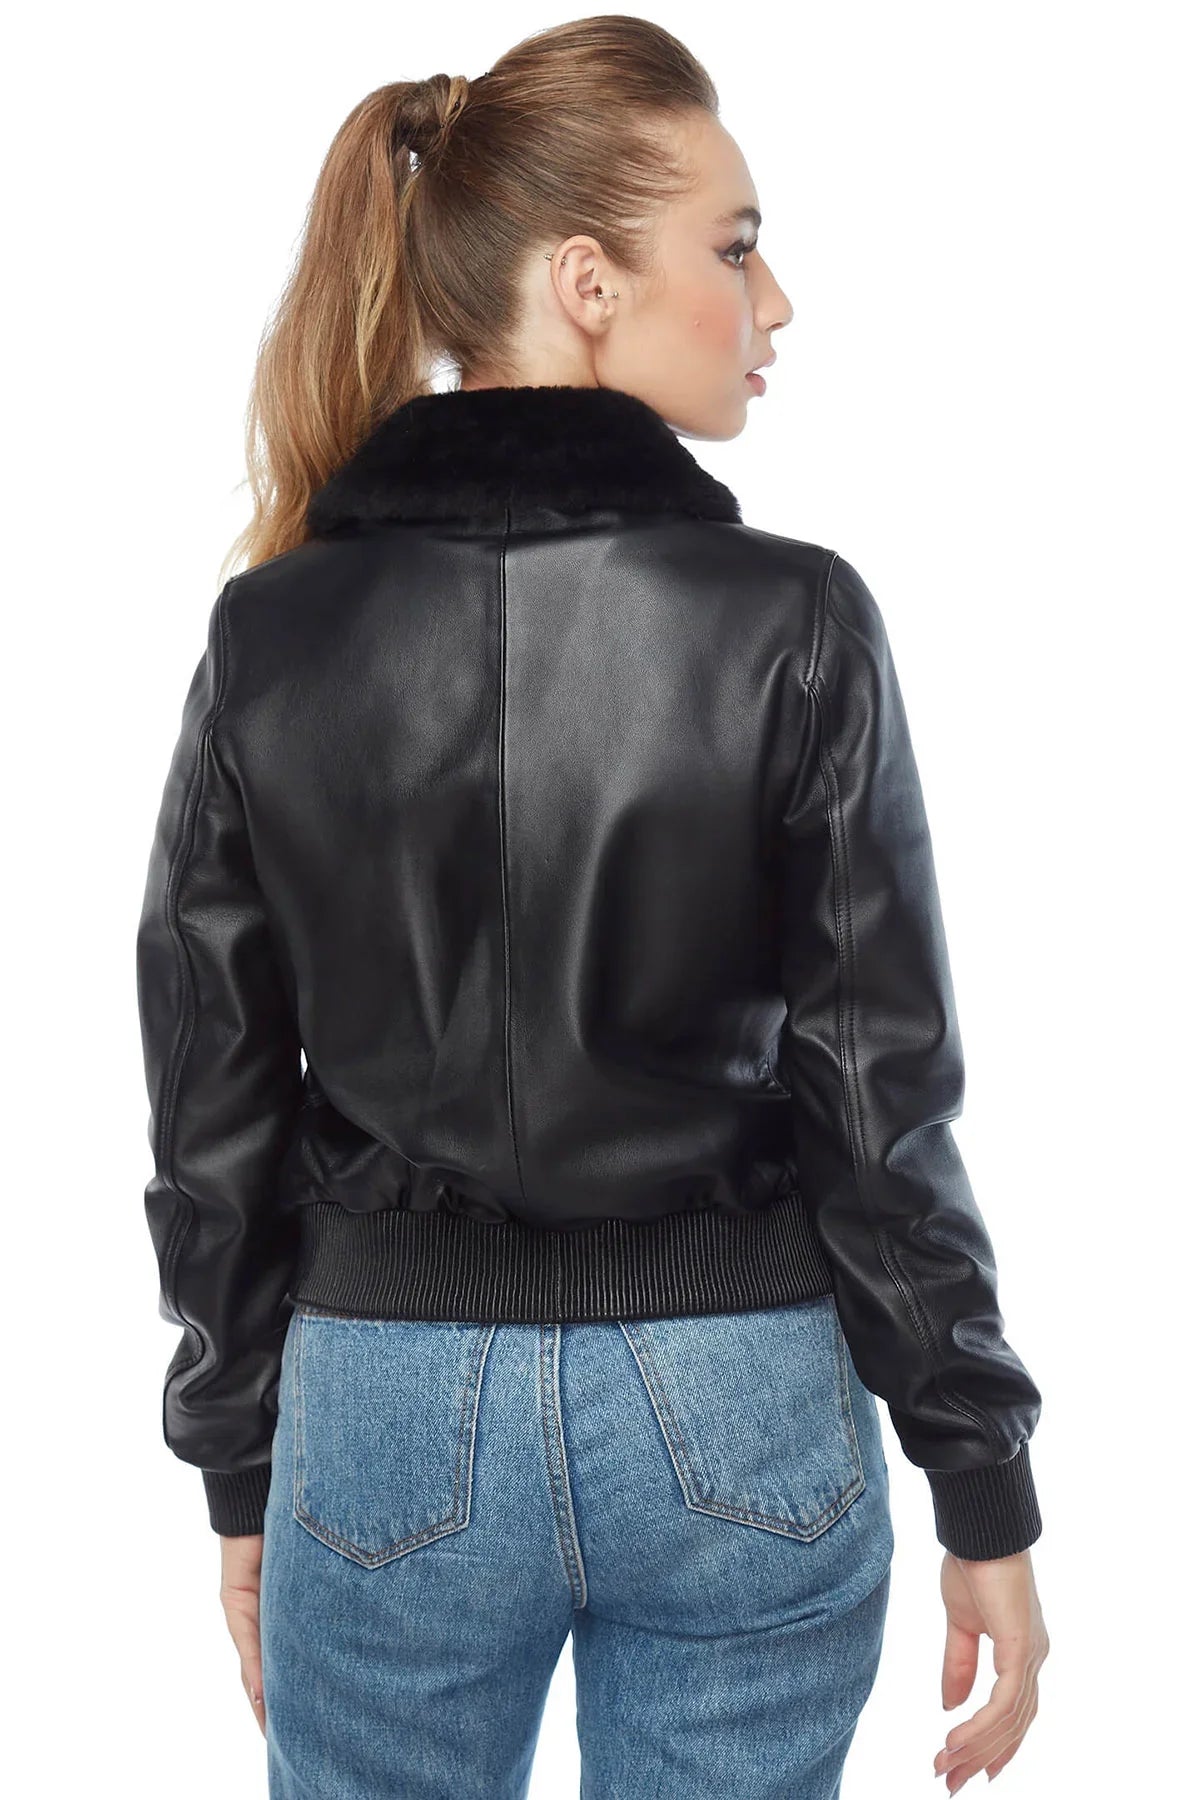 Women's Jet Black Bomber Leather Jacket